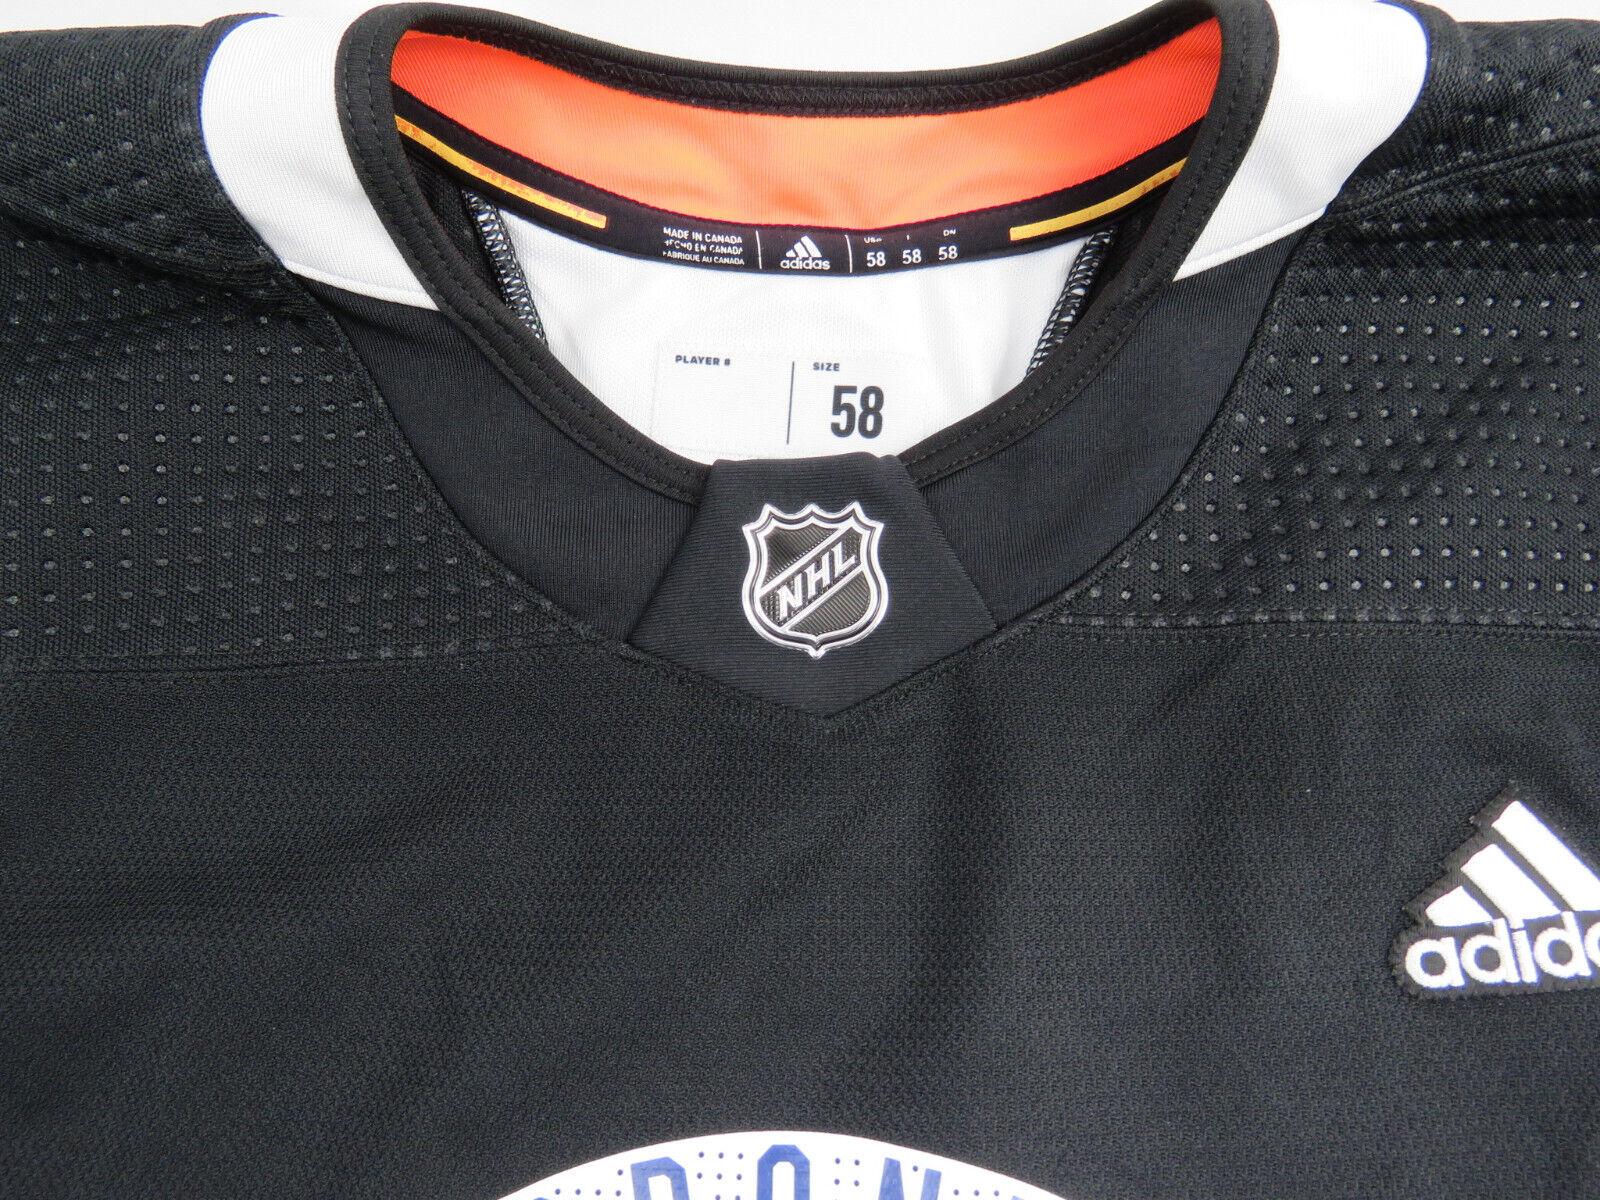 Adidas Toronto Maple Leafs Practice Worn Authentic NHL Hockey Jersey #53 Size 58